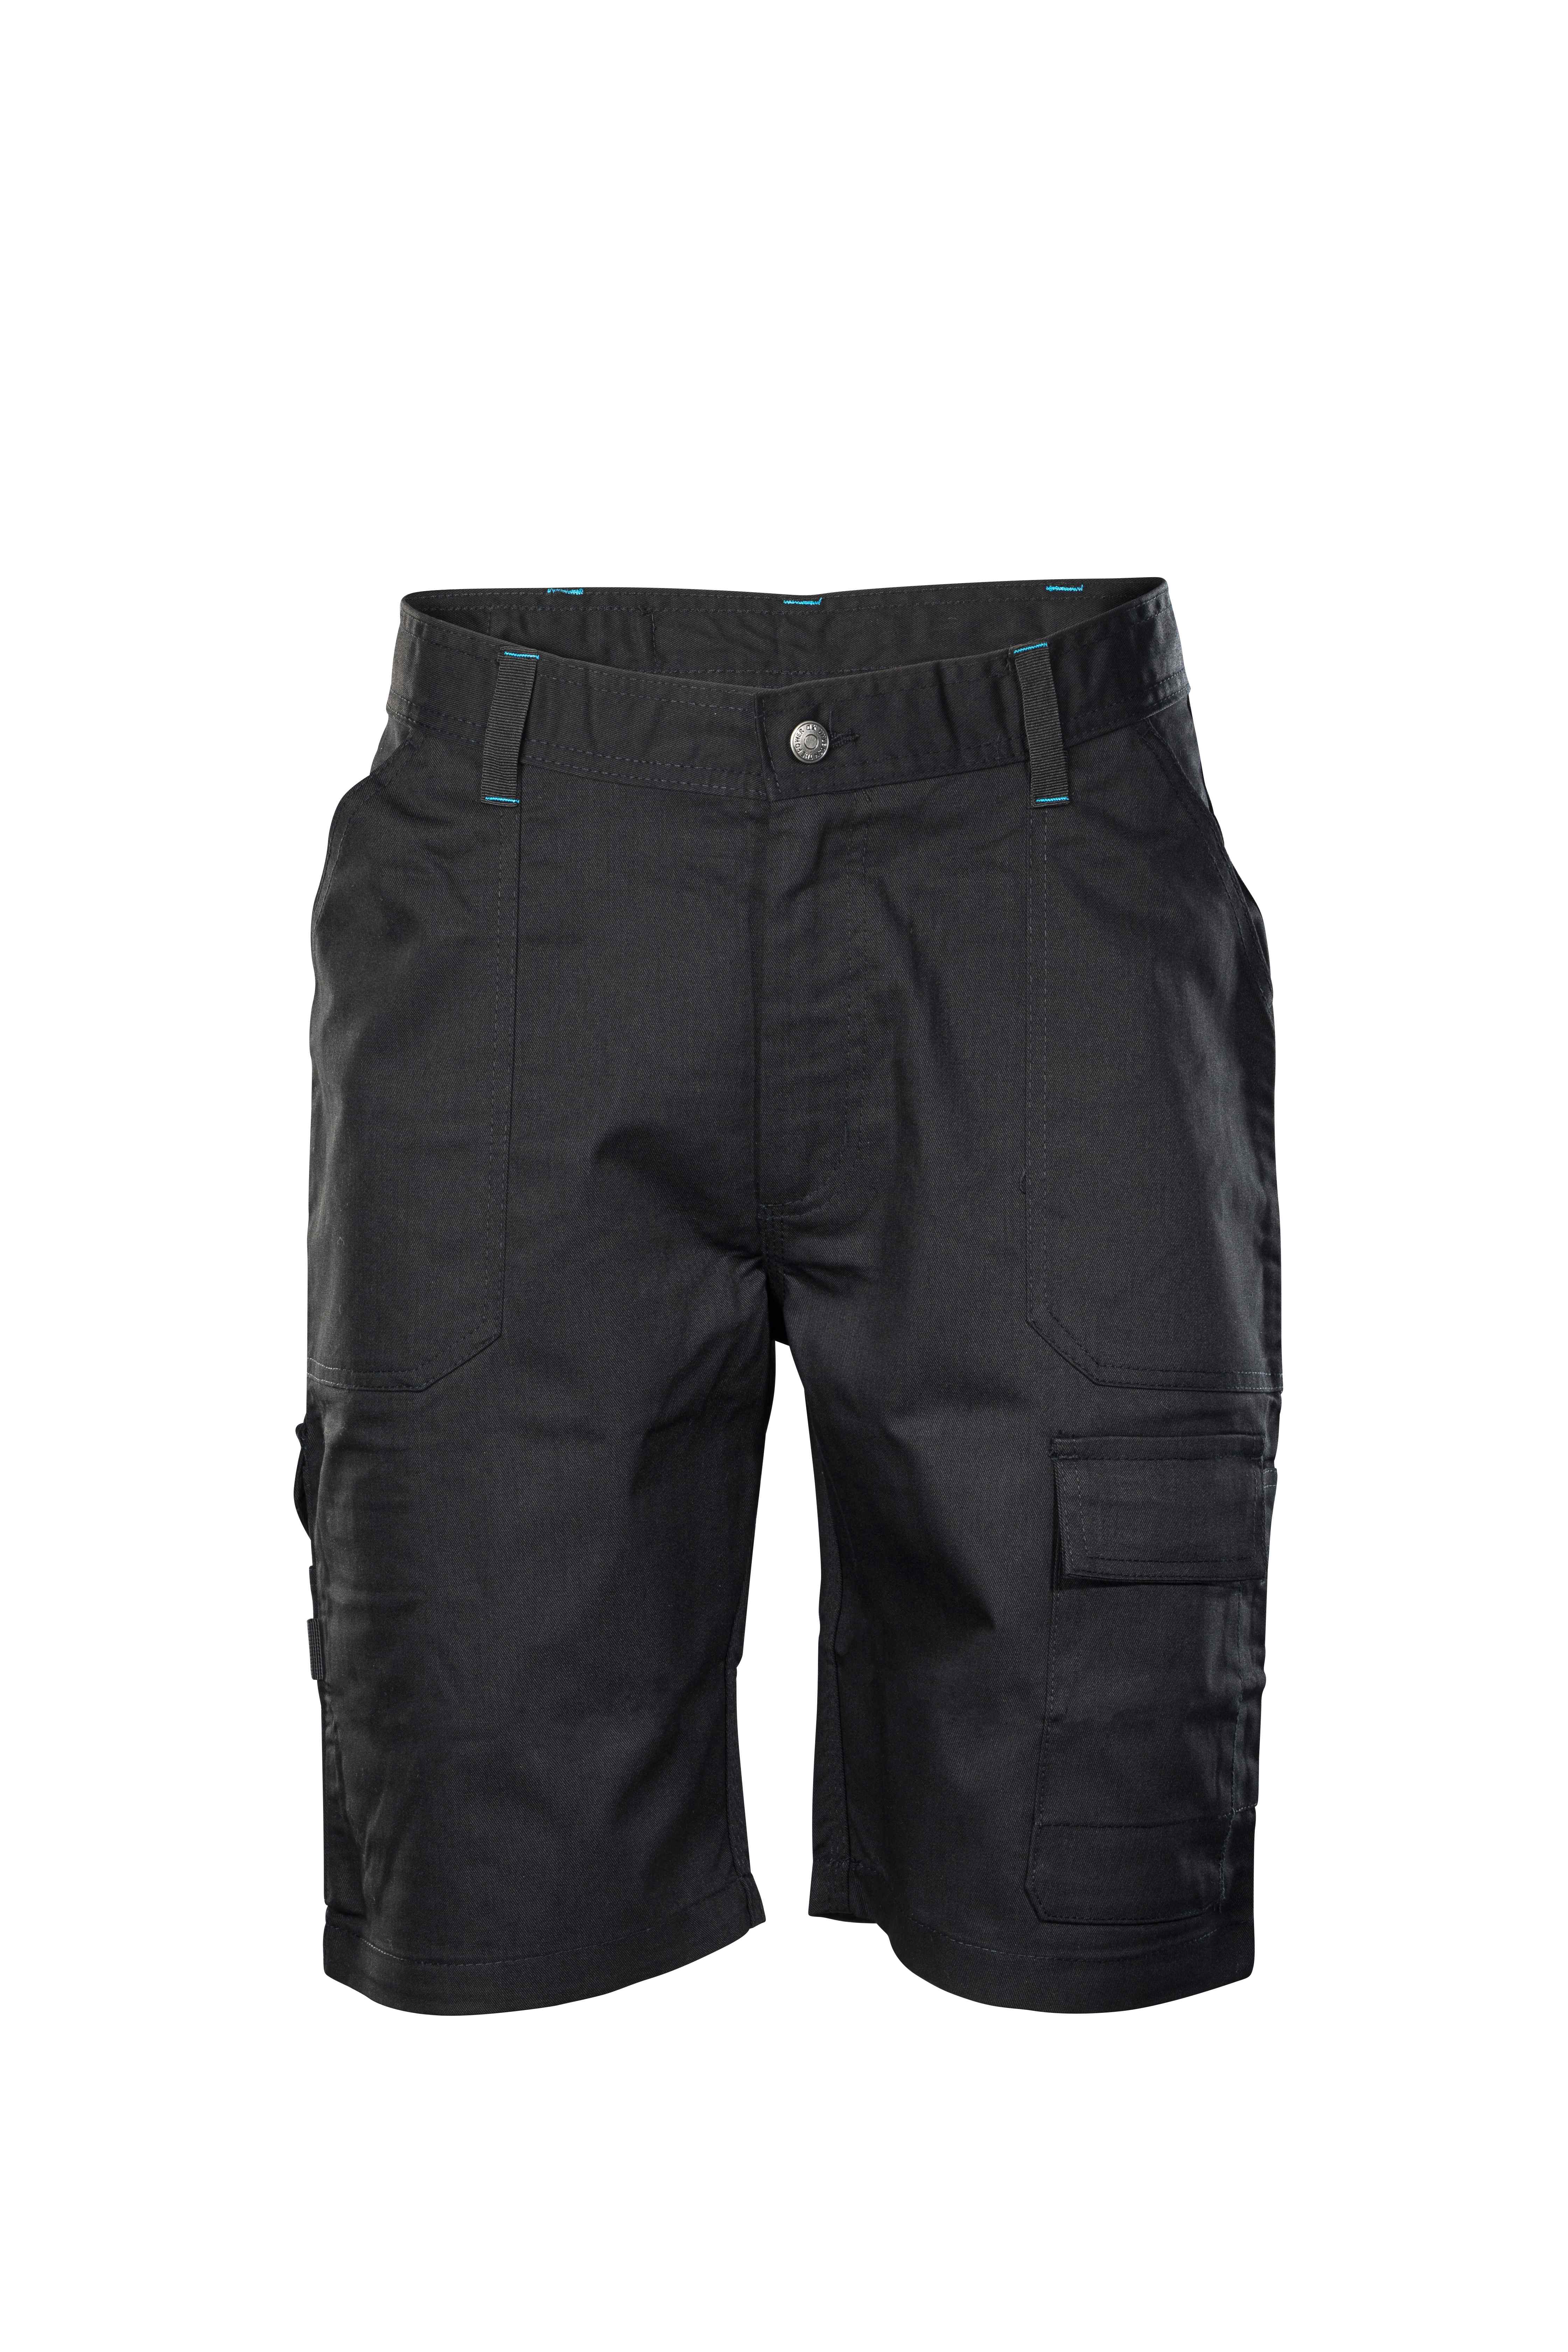 OX Multi Pocket Trade Shorts 38